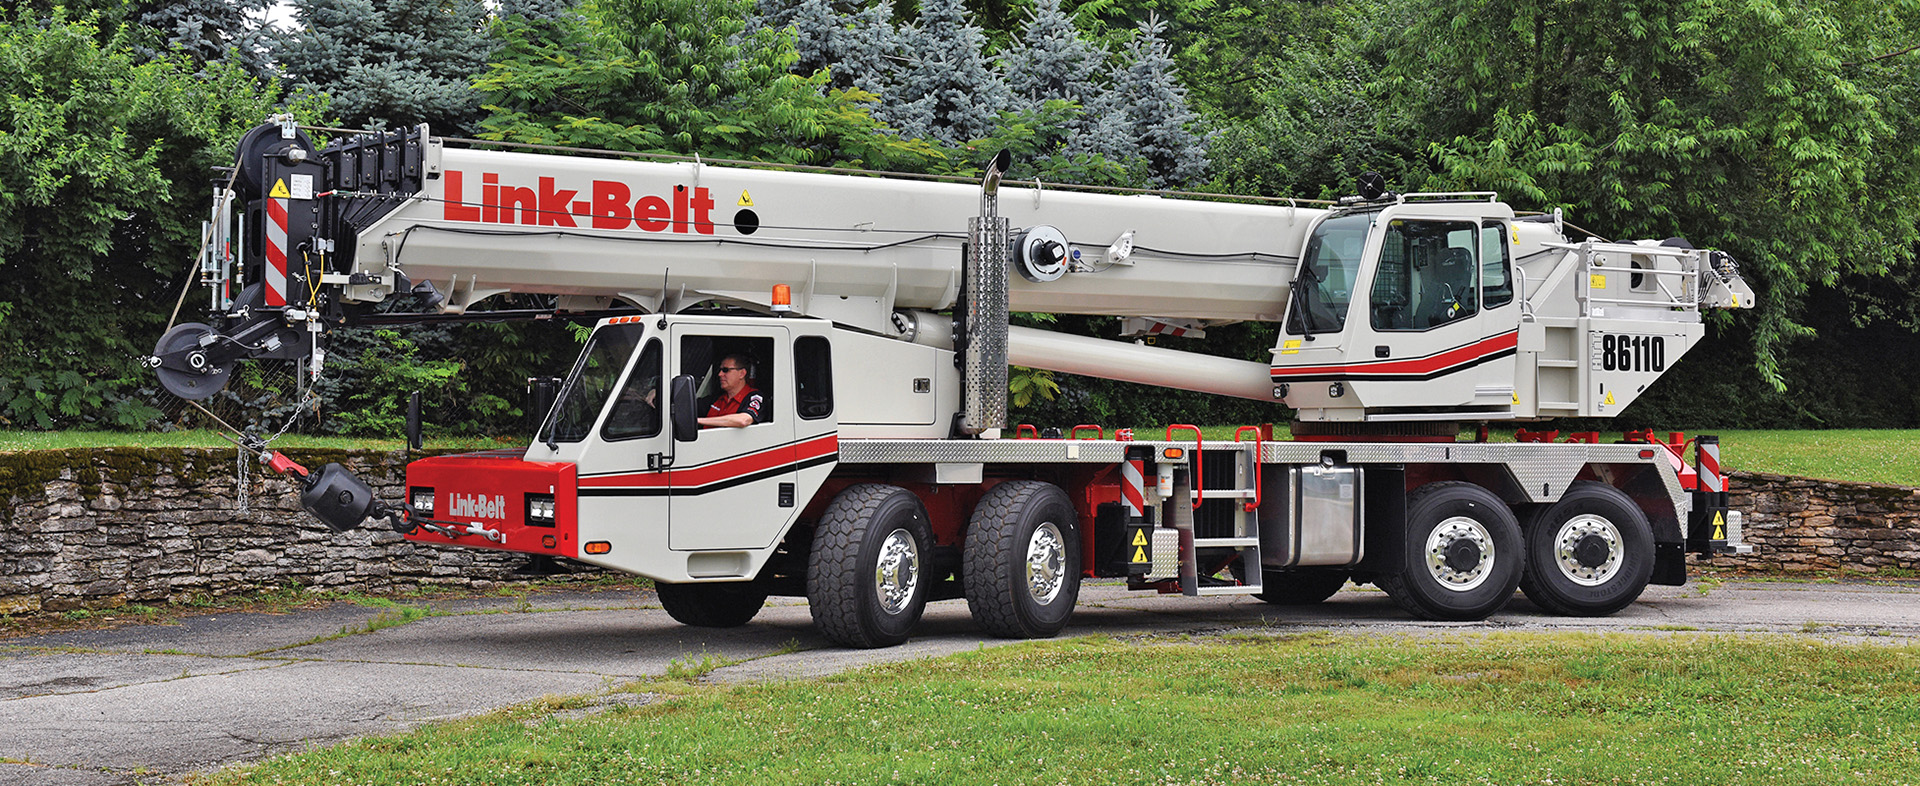 Link-Belt crane being driven by a staff member of PJB Crane Services in Sparwood 